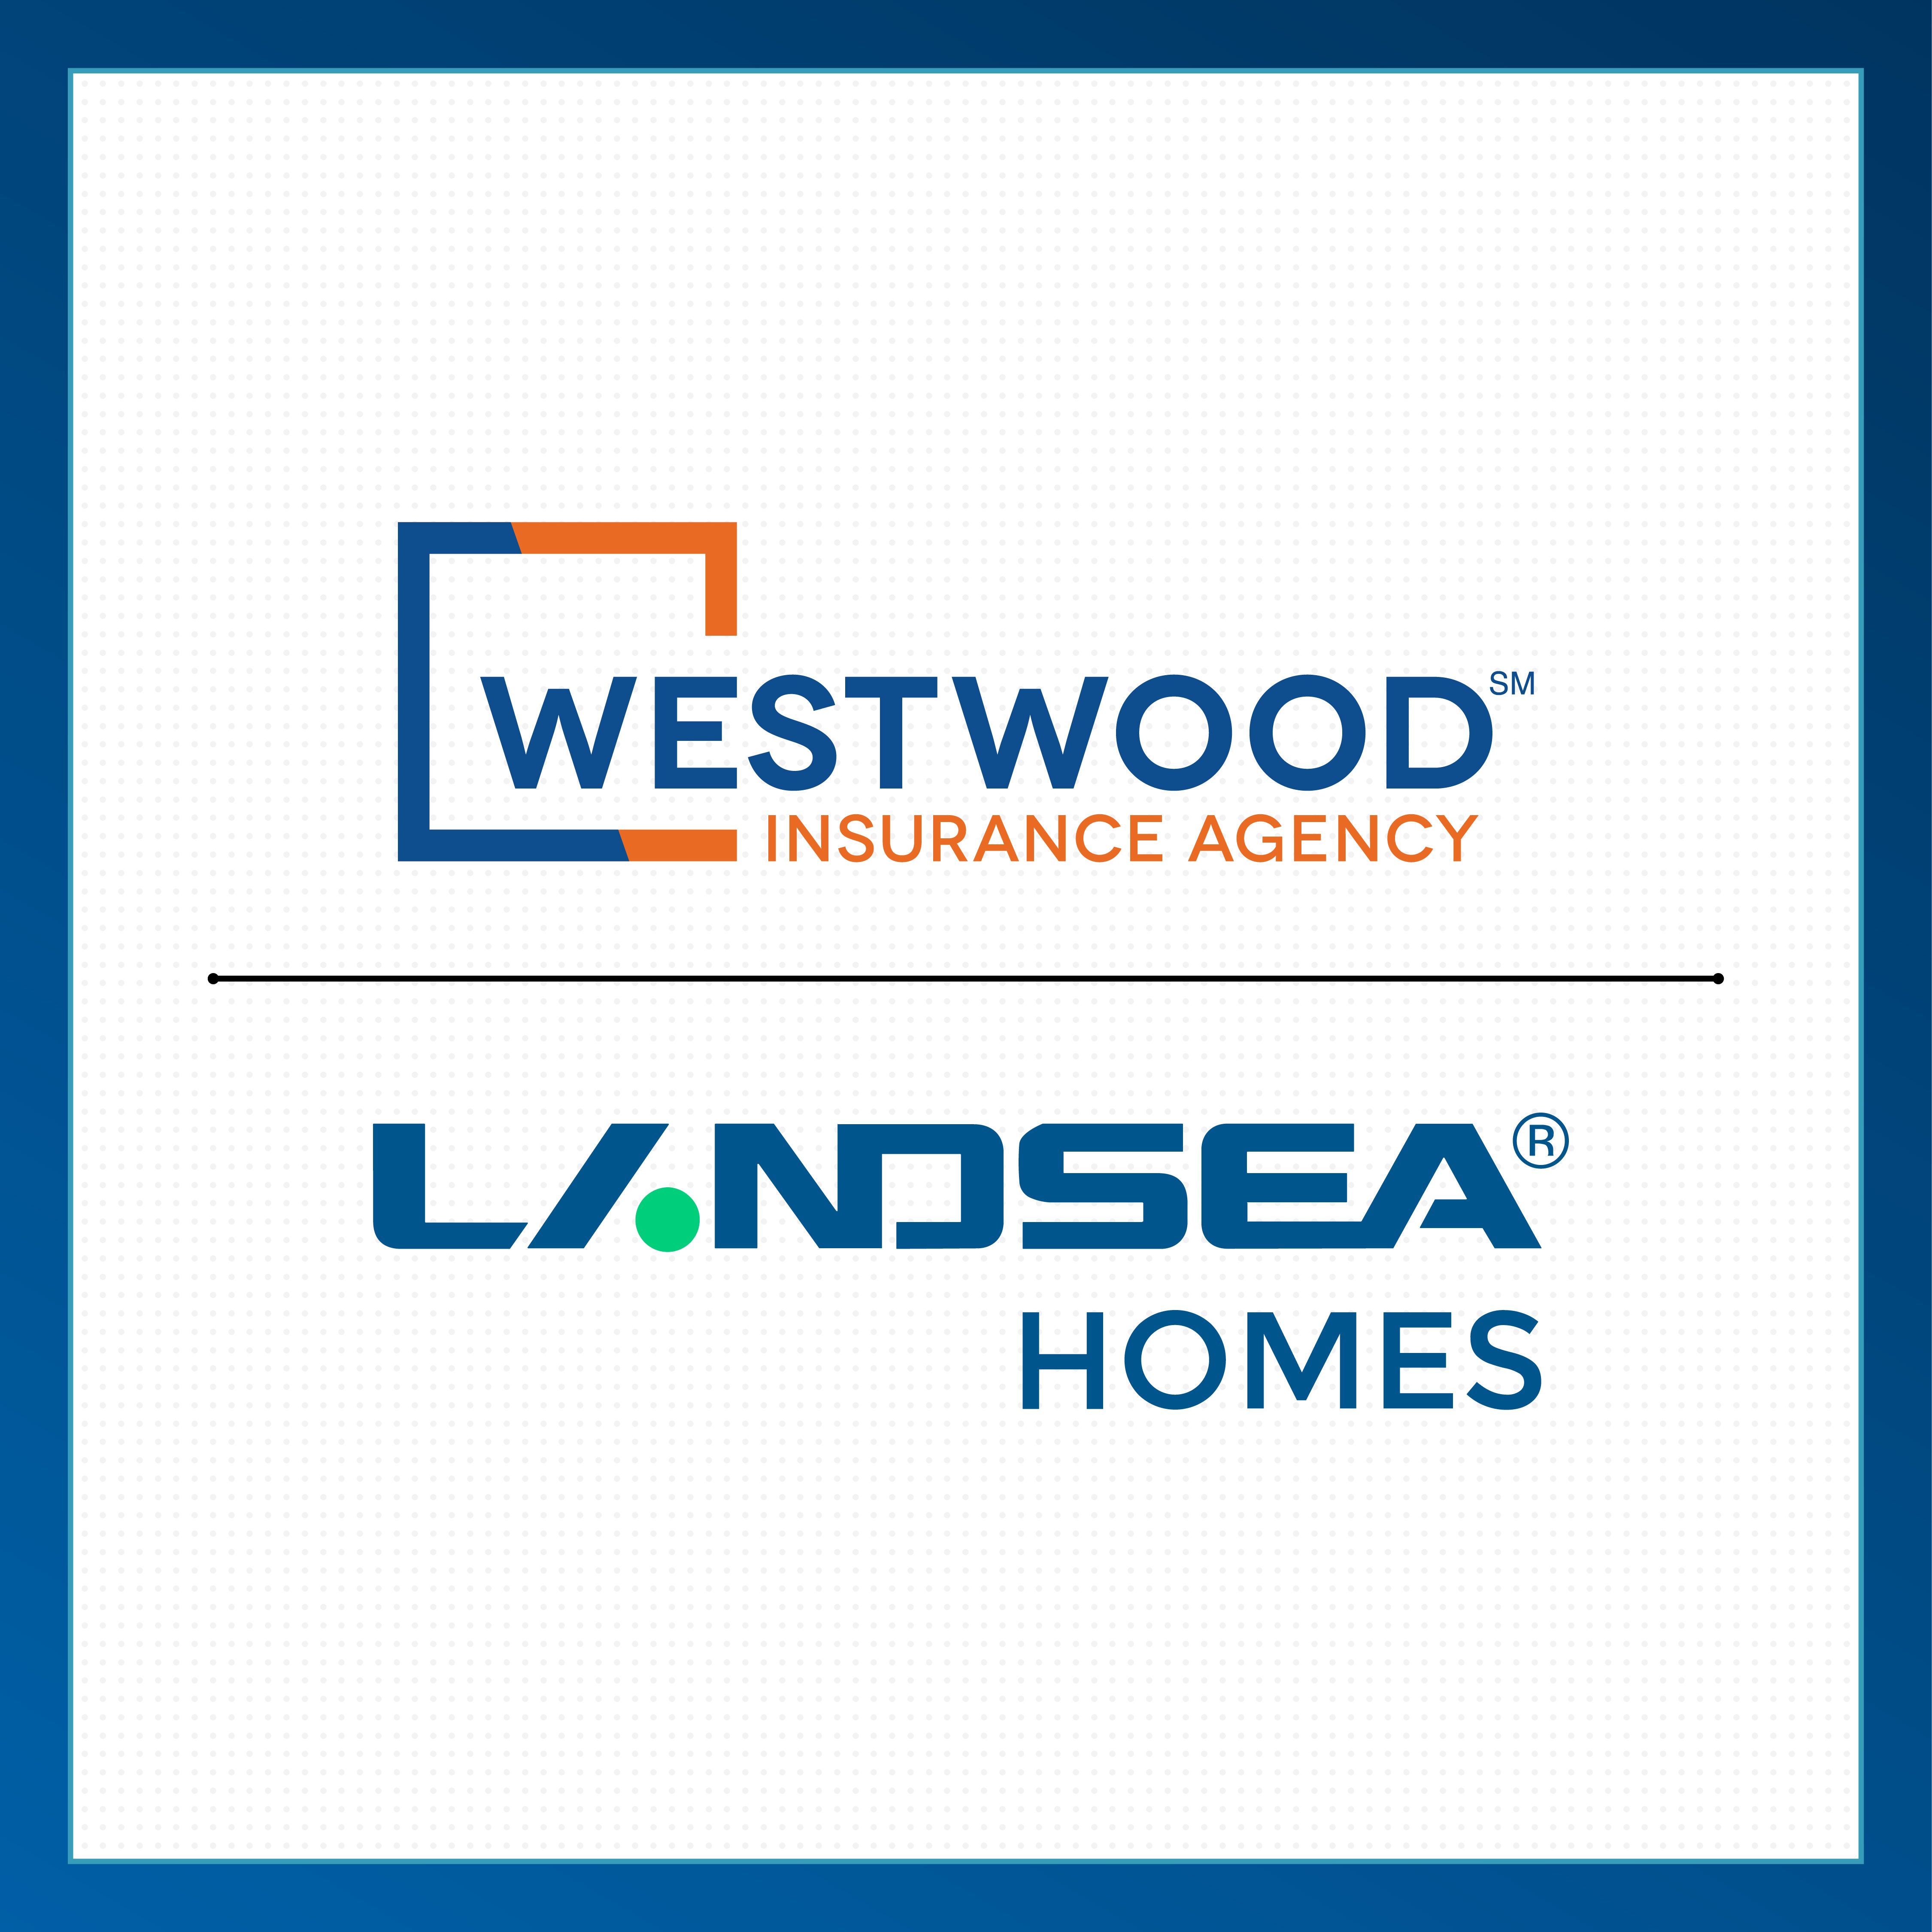 WIA Landsea partnership Business Wire press release announcement.